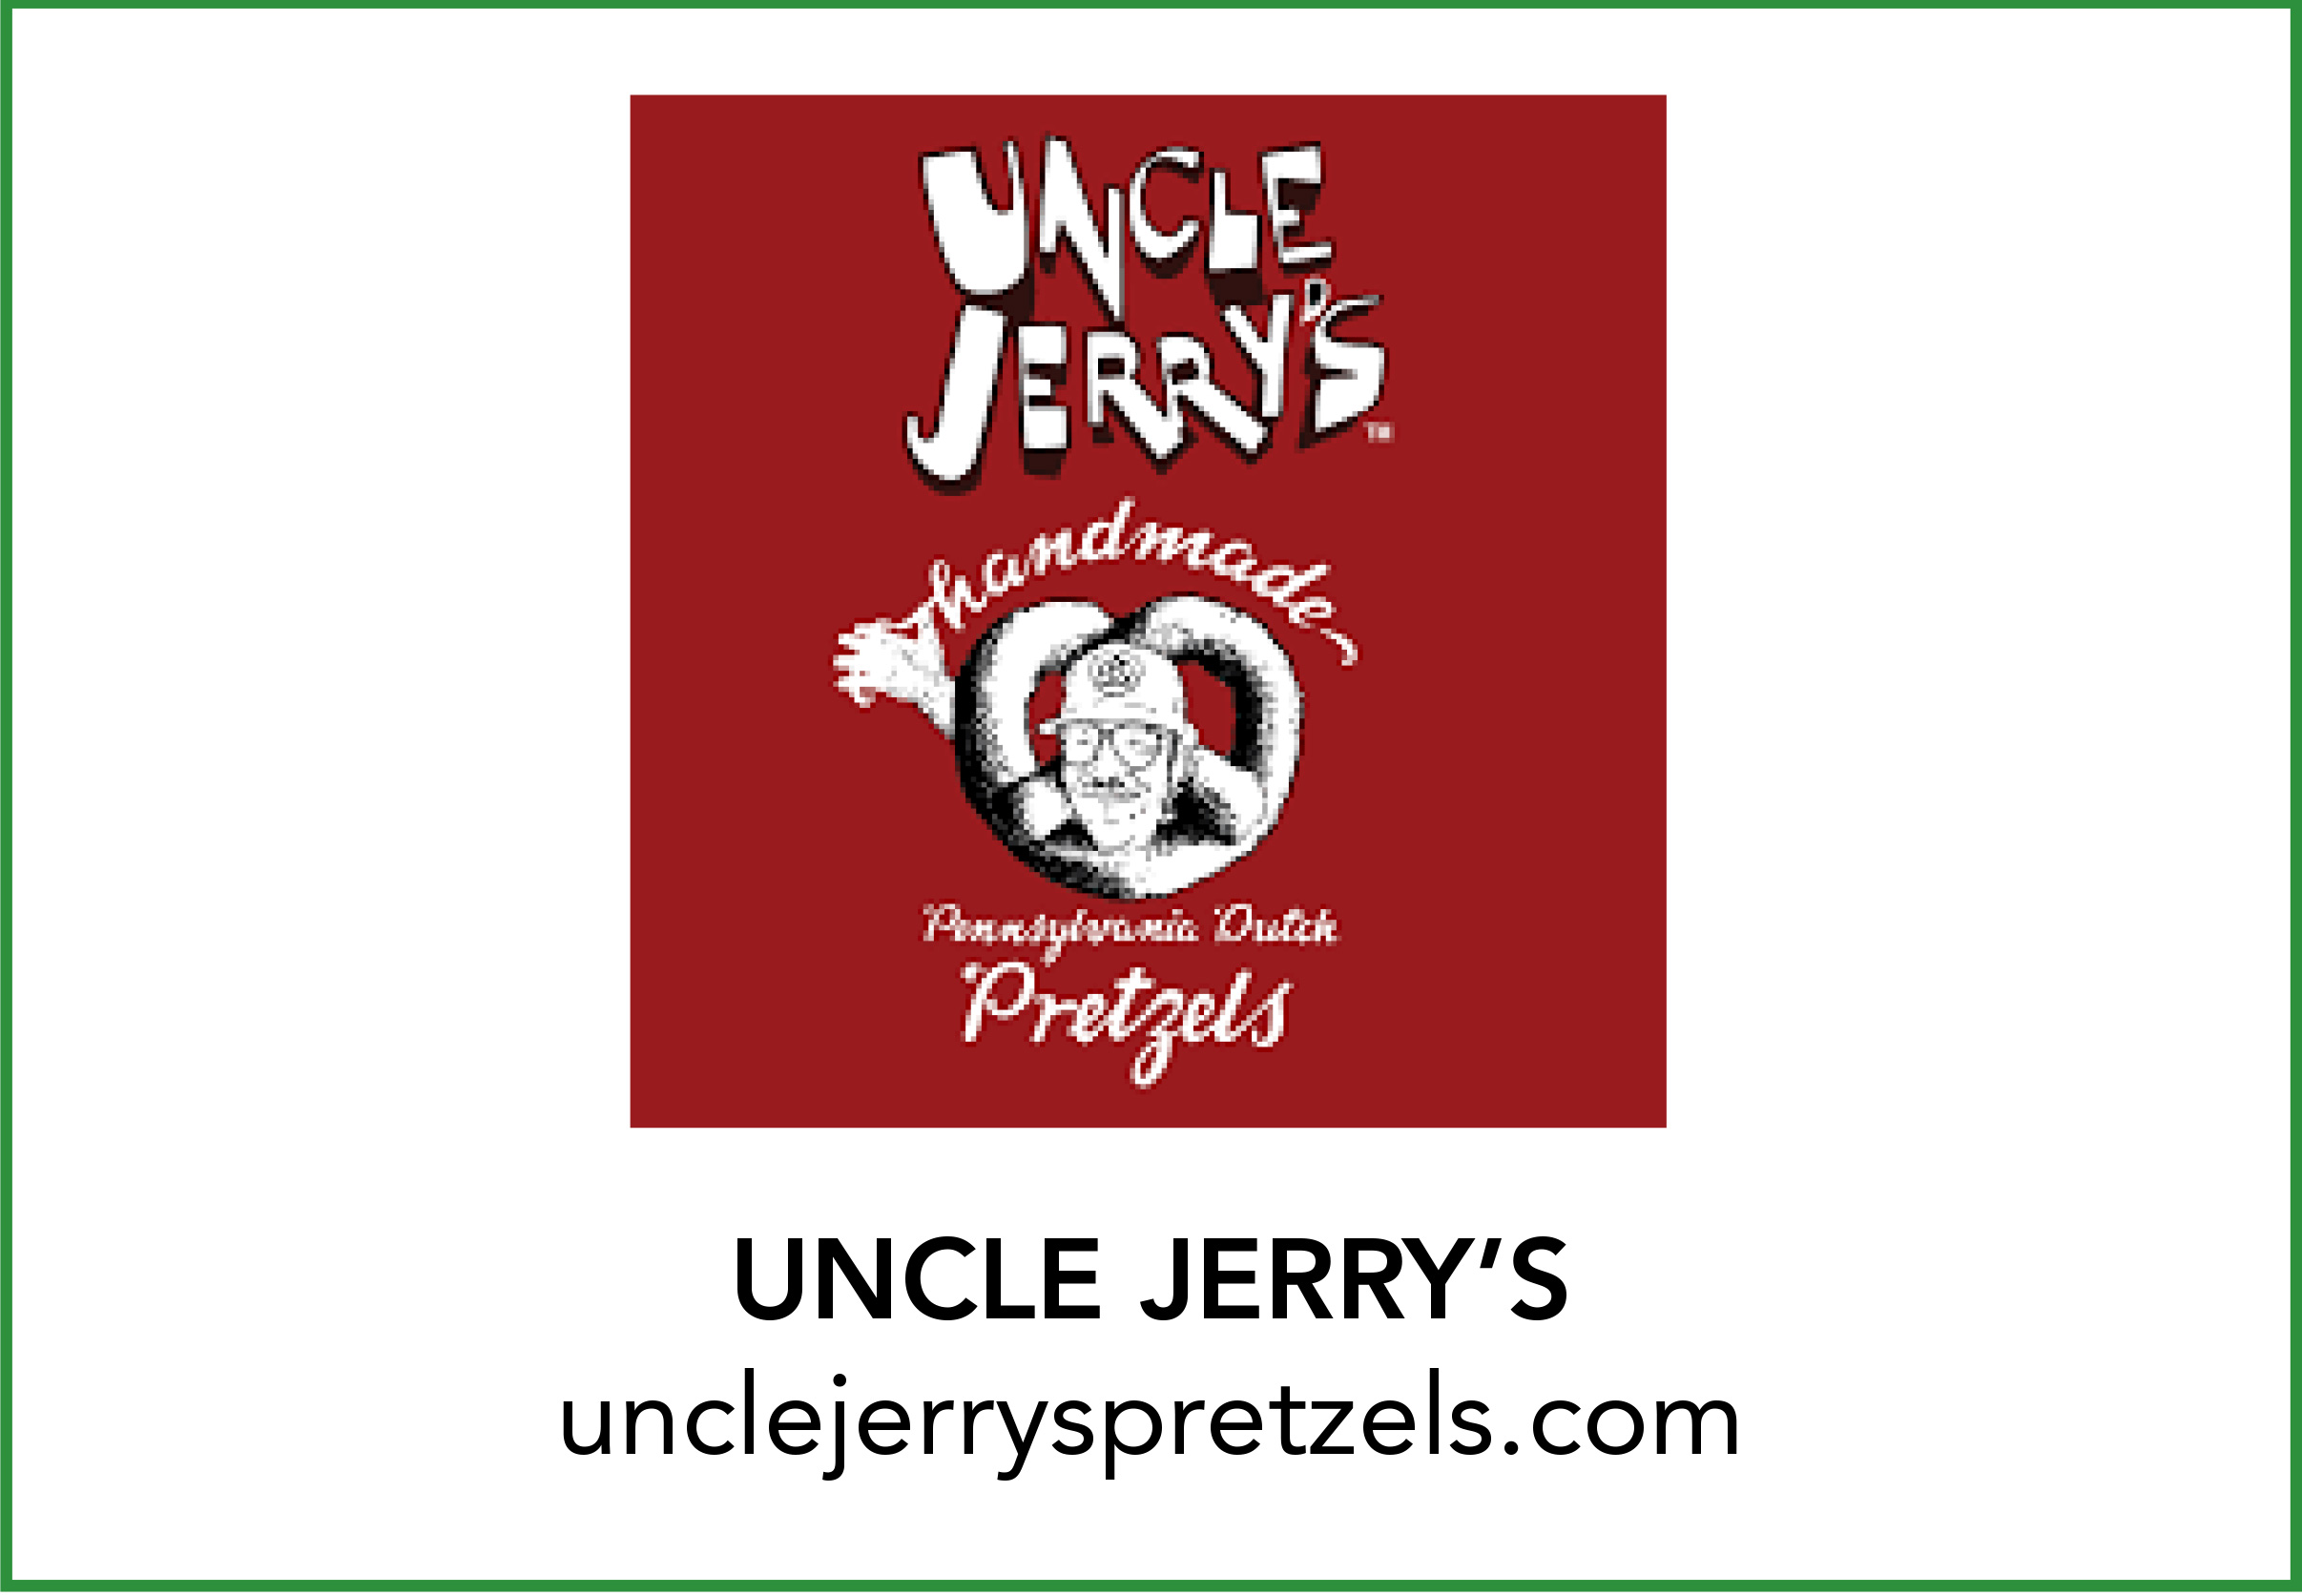 UNCLE JERRY’S